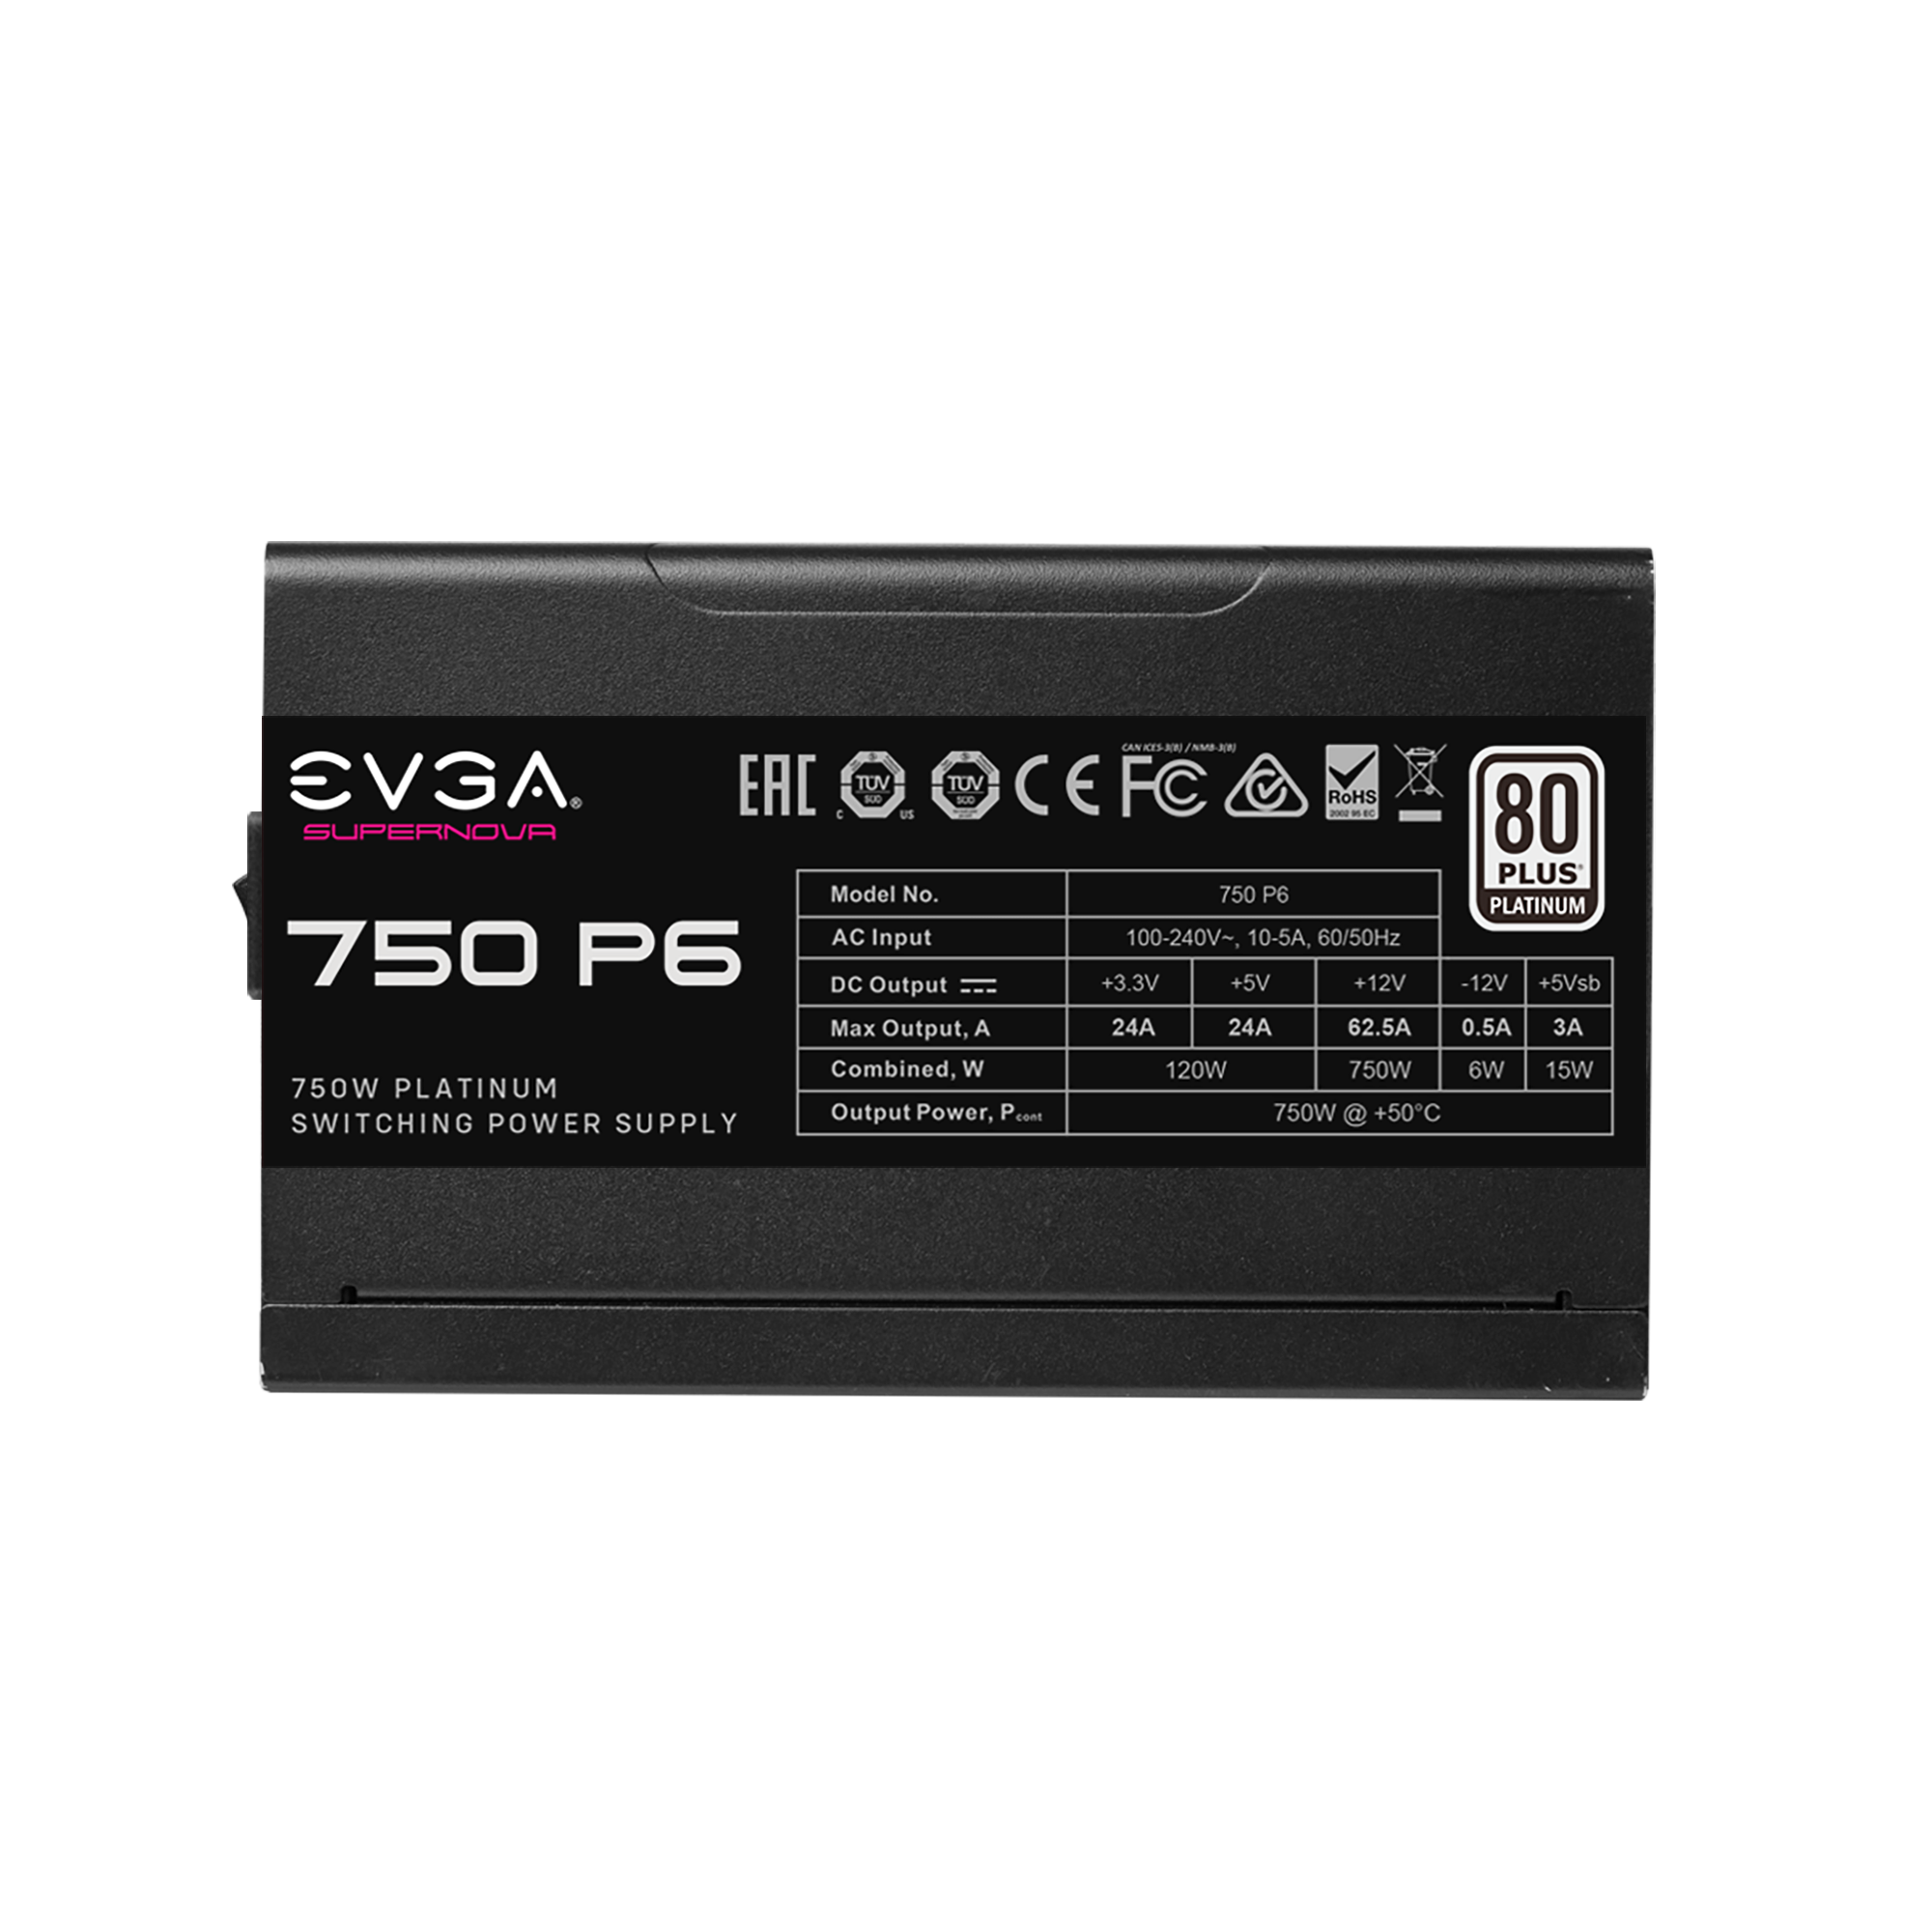 EVGA - Products - EVGA SuperNOVA 750 P6, 80 Plus Platinum 750W